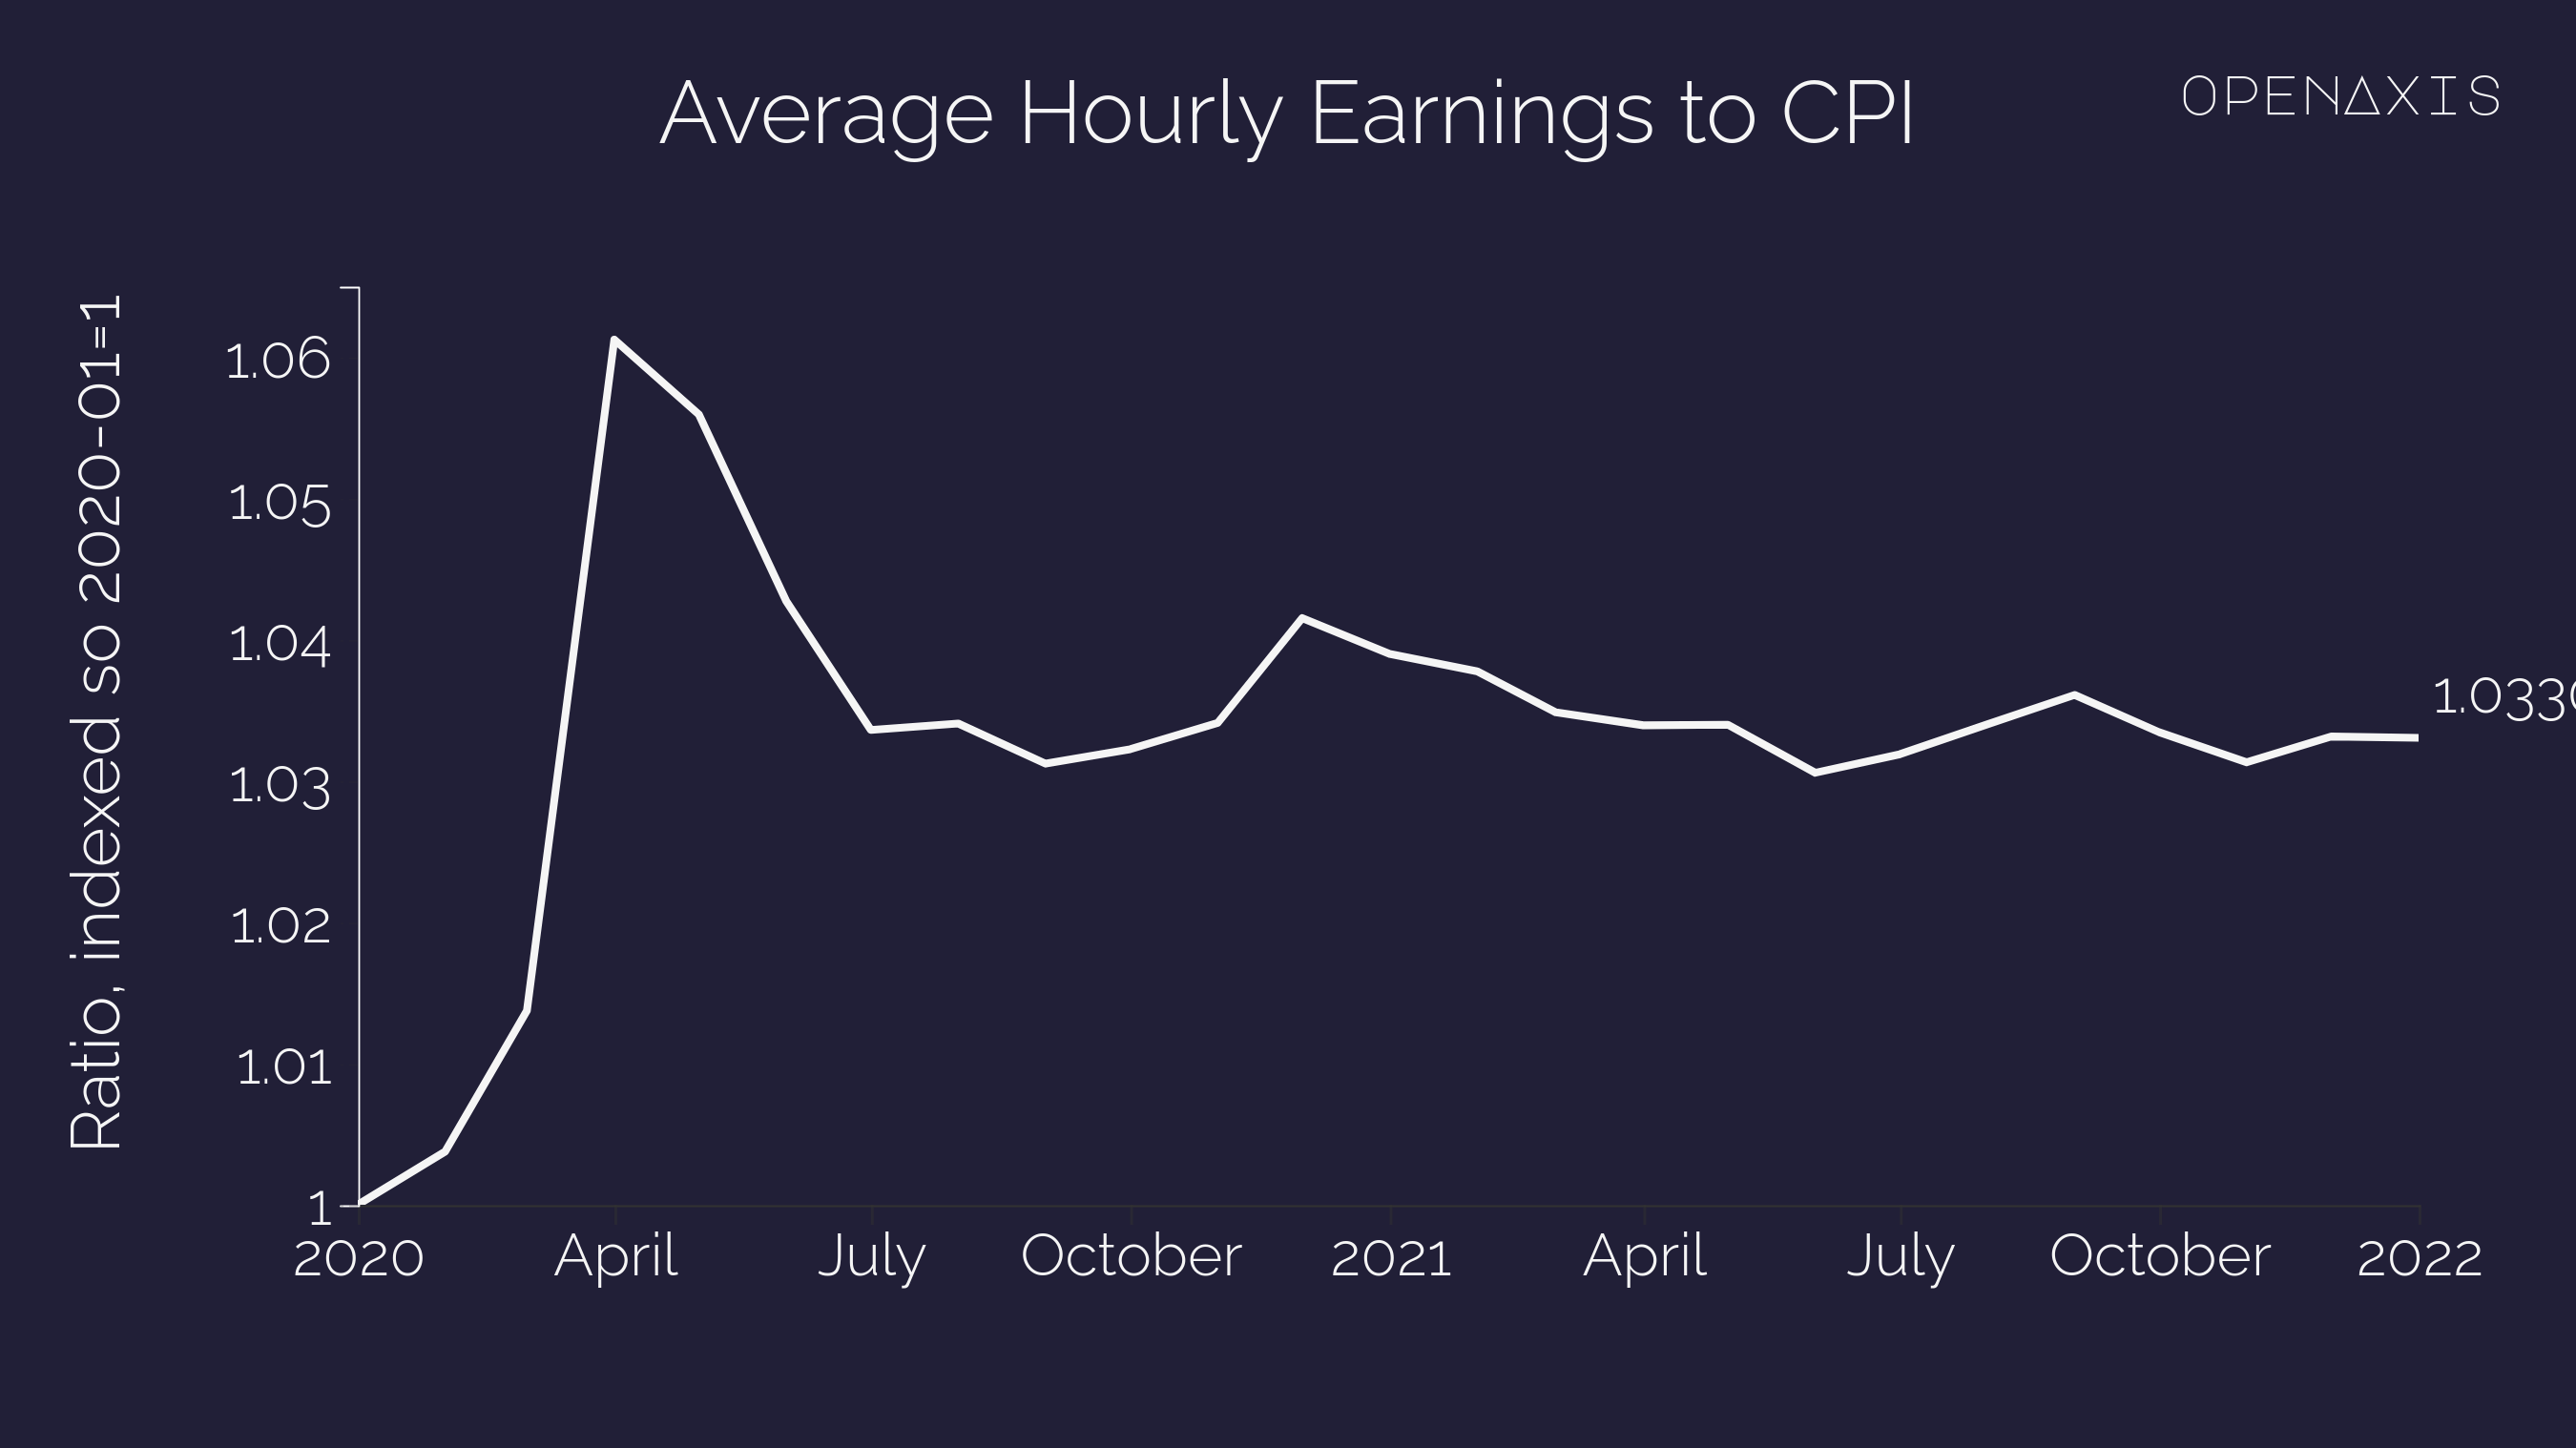 "Average Hourly Earnings to CPI"